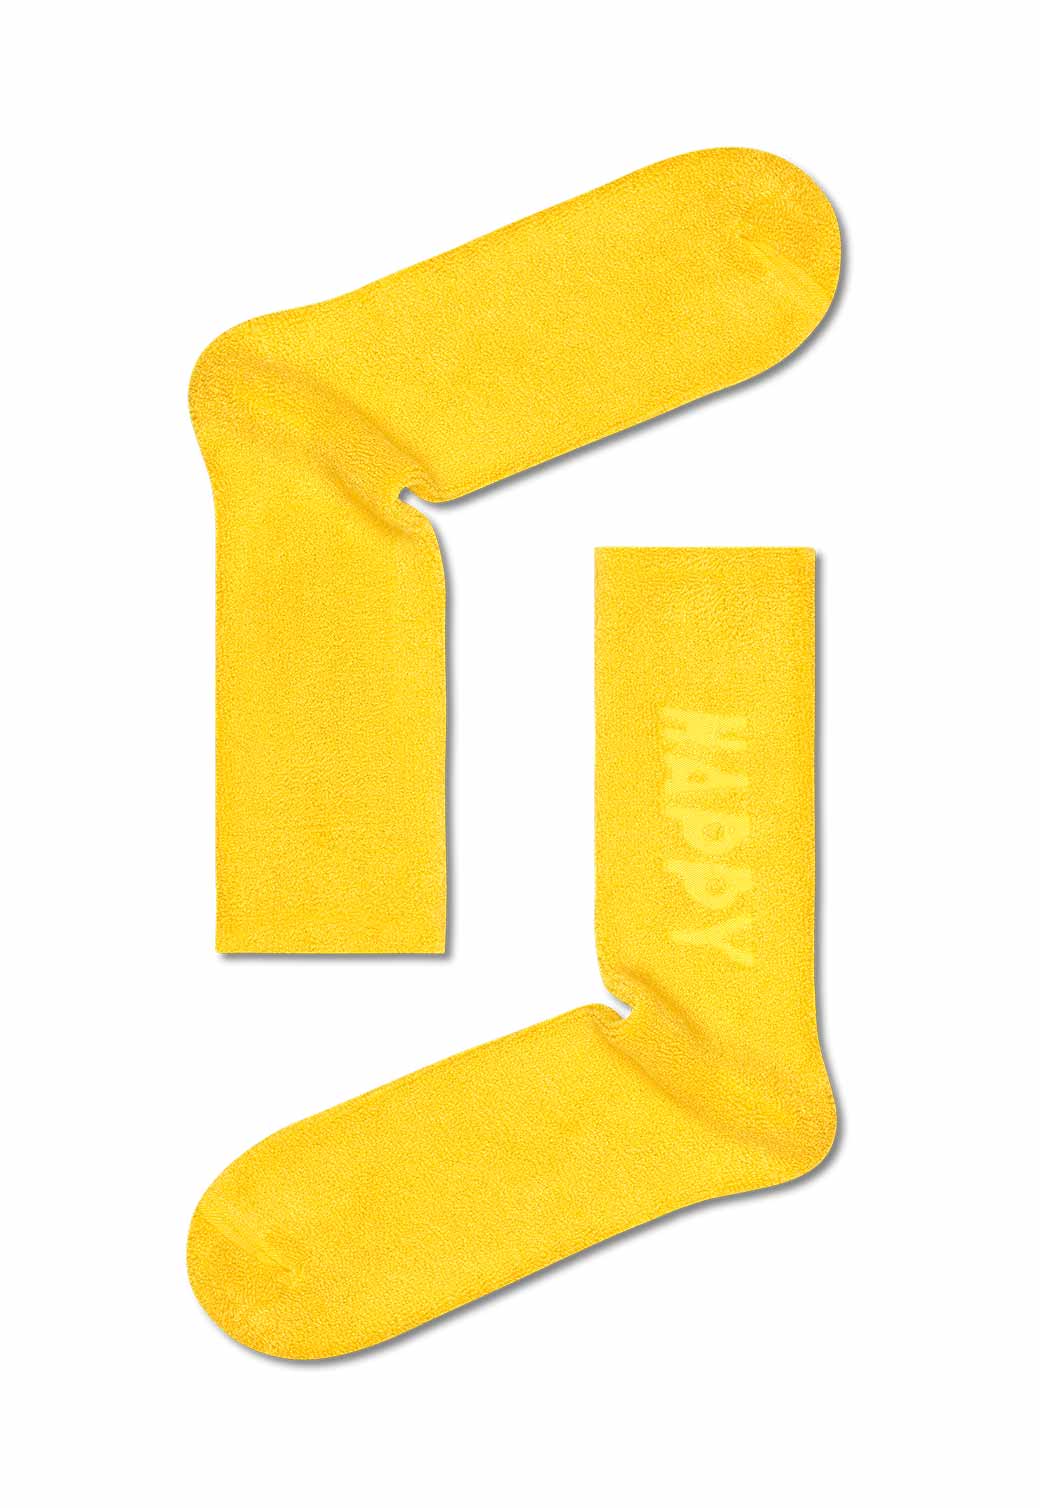 Gold זוג גרביים בהדפס HAPPY HAPPY SOCKS